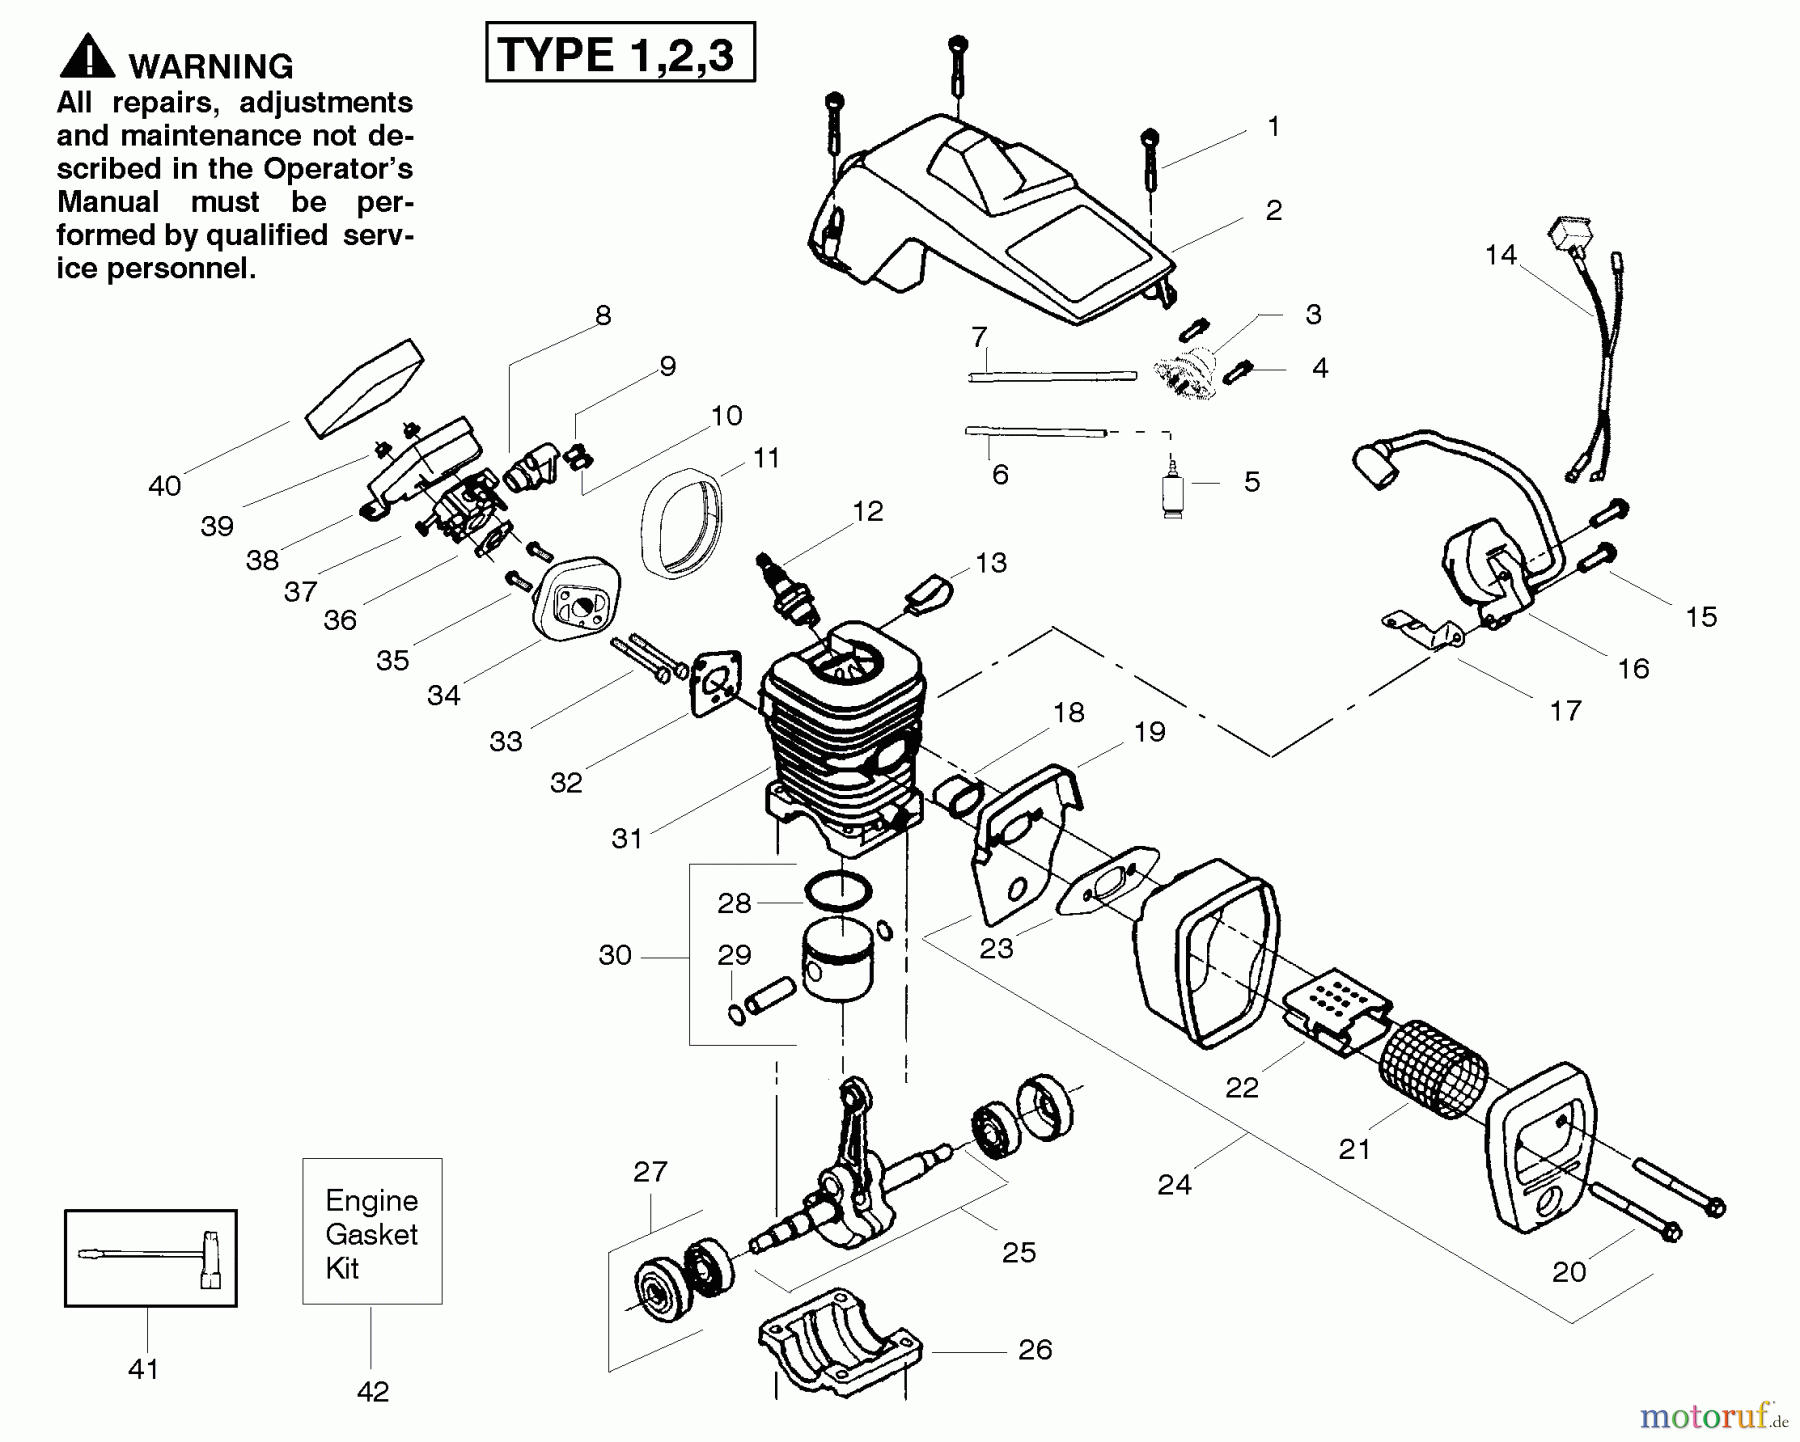  Poulan / Weed Eater Motorsägen PP260 (Type 2) - Poulan Pro Chainsaw Engine Type 1,2,3